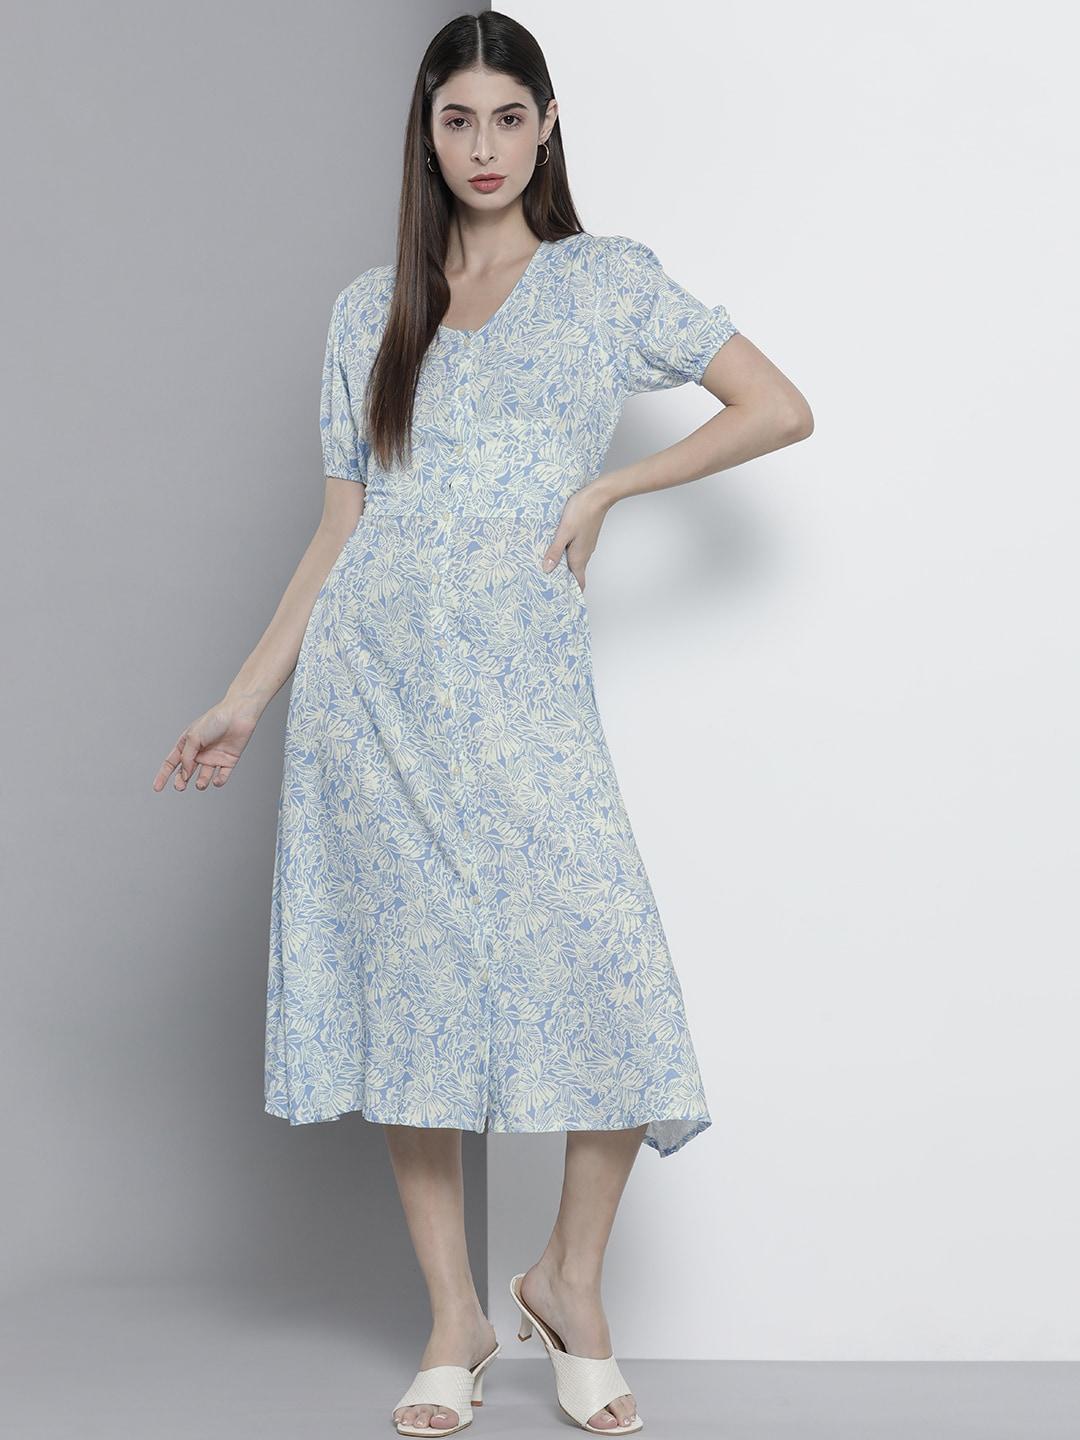 nautica off white & blue floral shirt midi dress